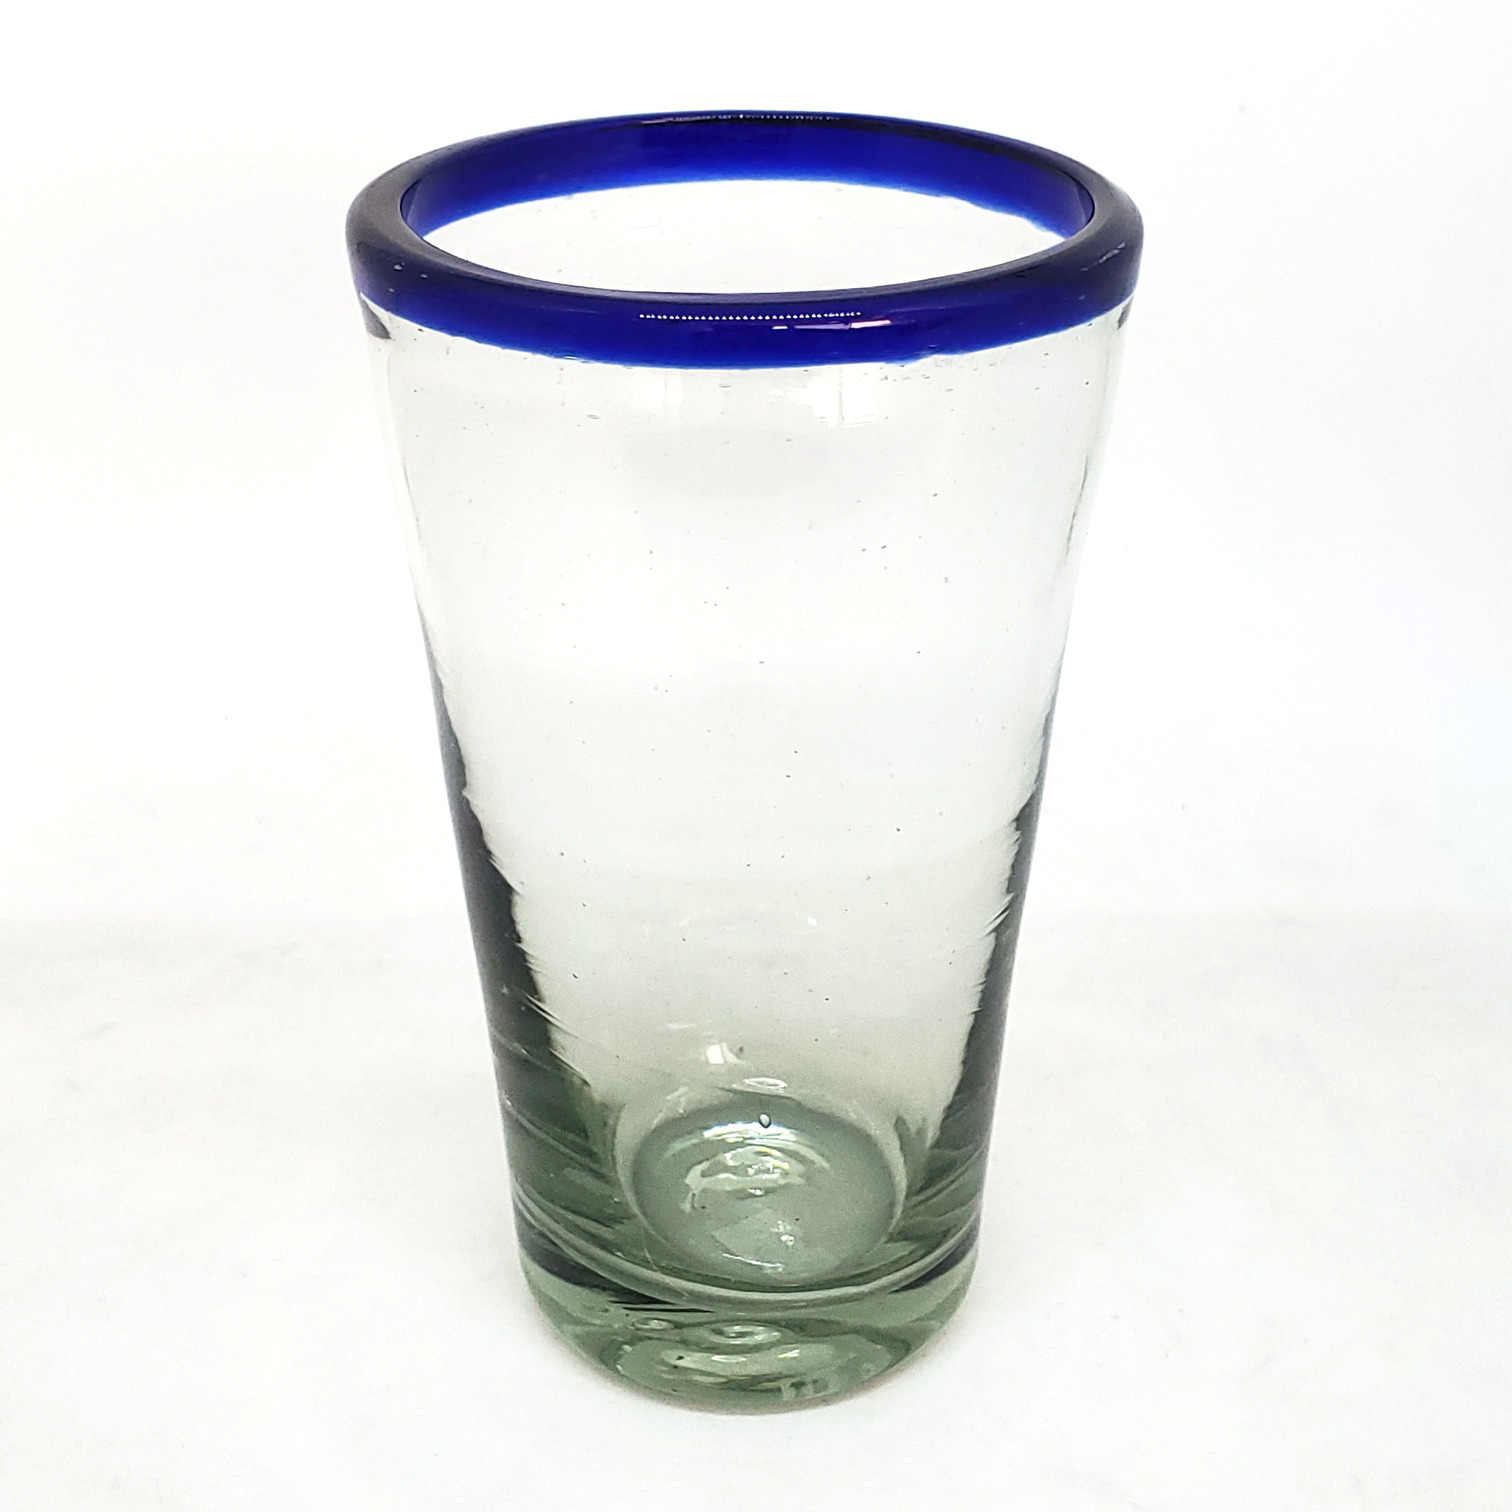 Cobalt Blue Rim 16 oz Pint Glasses (set of 6)